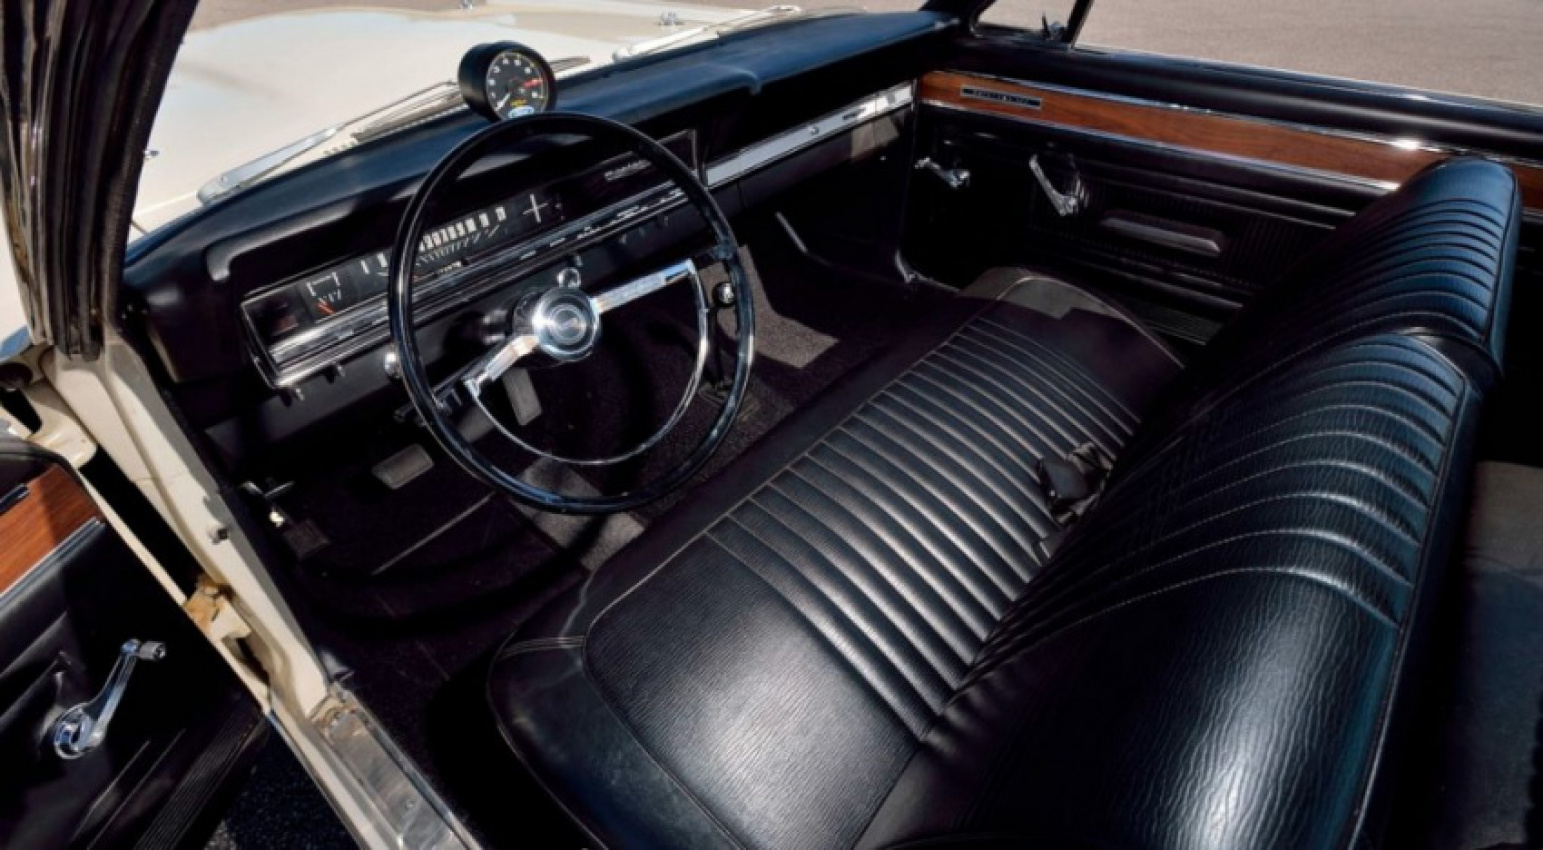 acer, autos, cars, ford, nascar engine 1966 fairlane r-code, ford’s street-legal drag racer